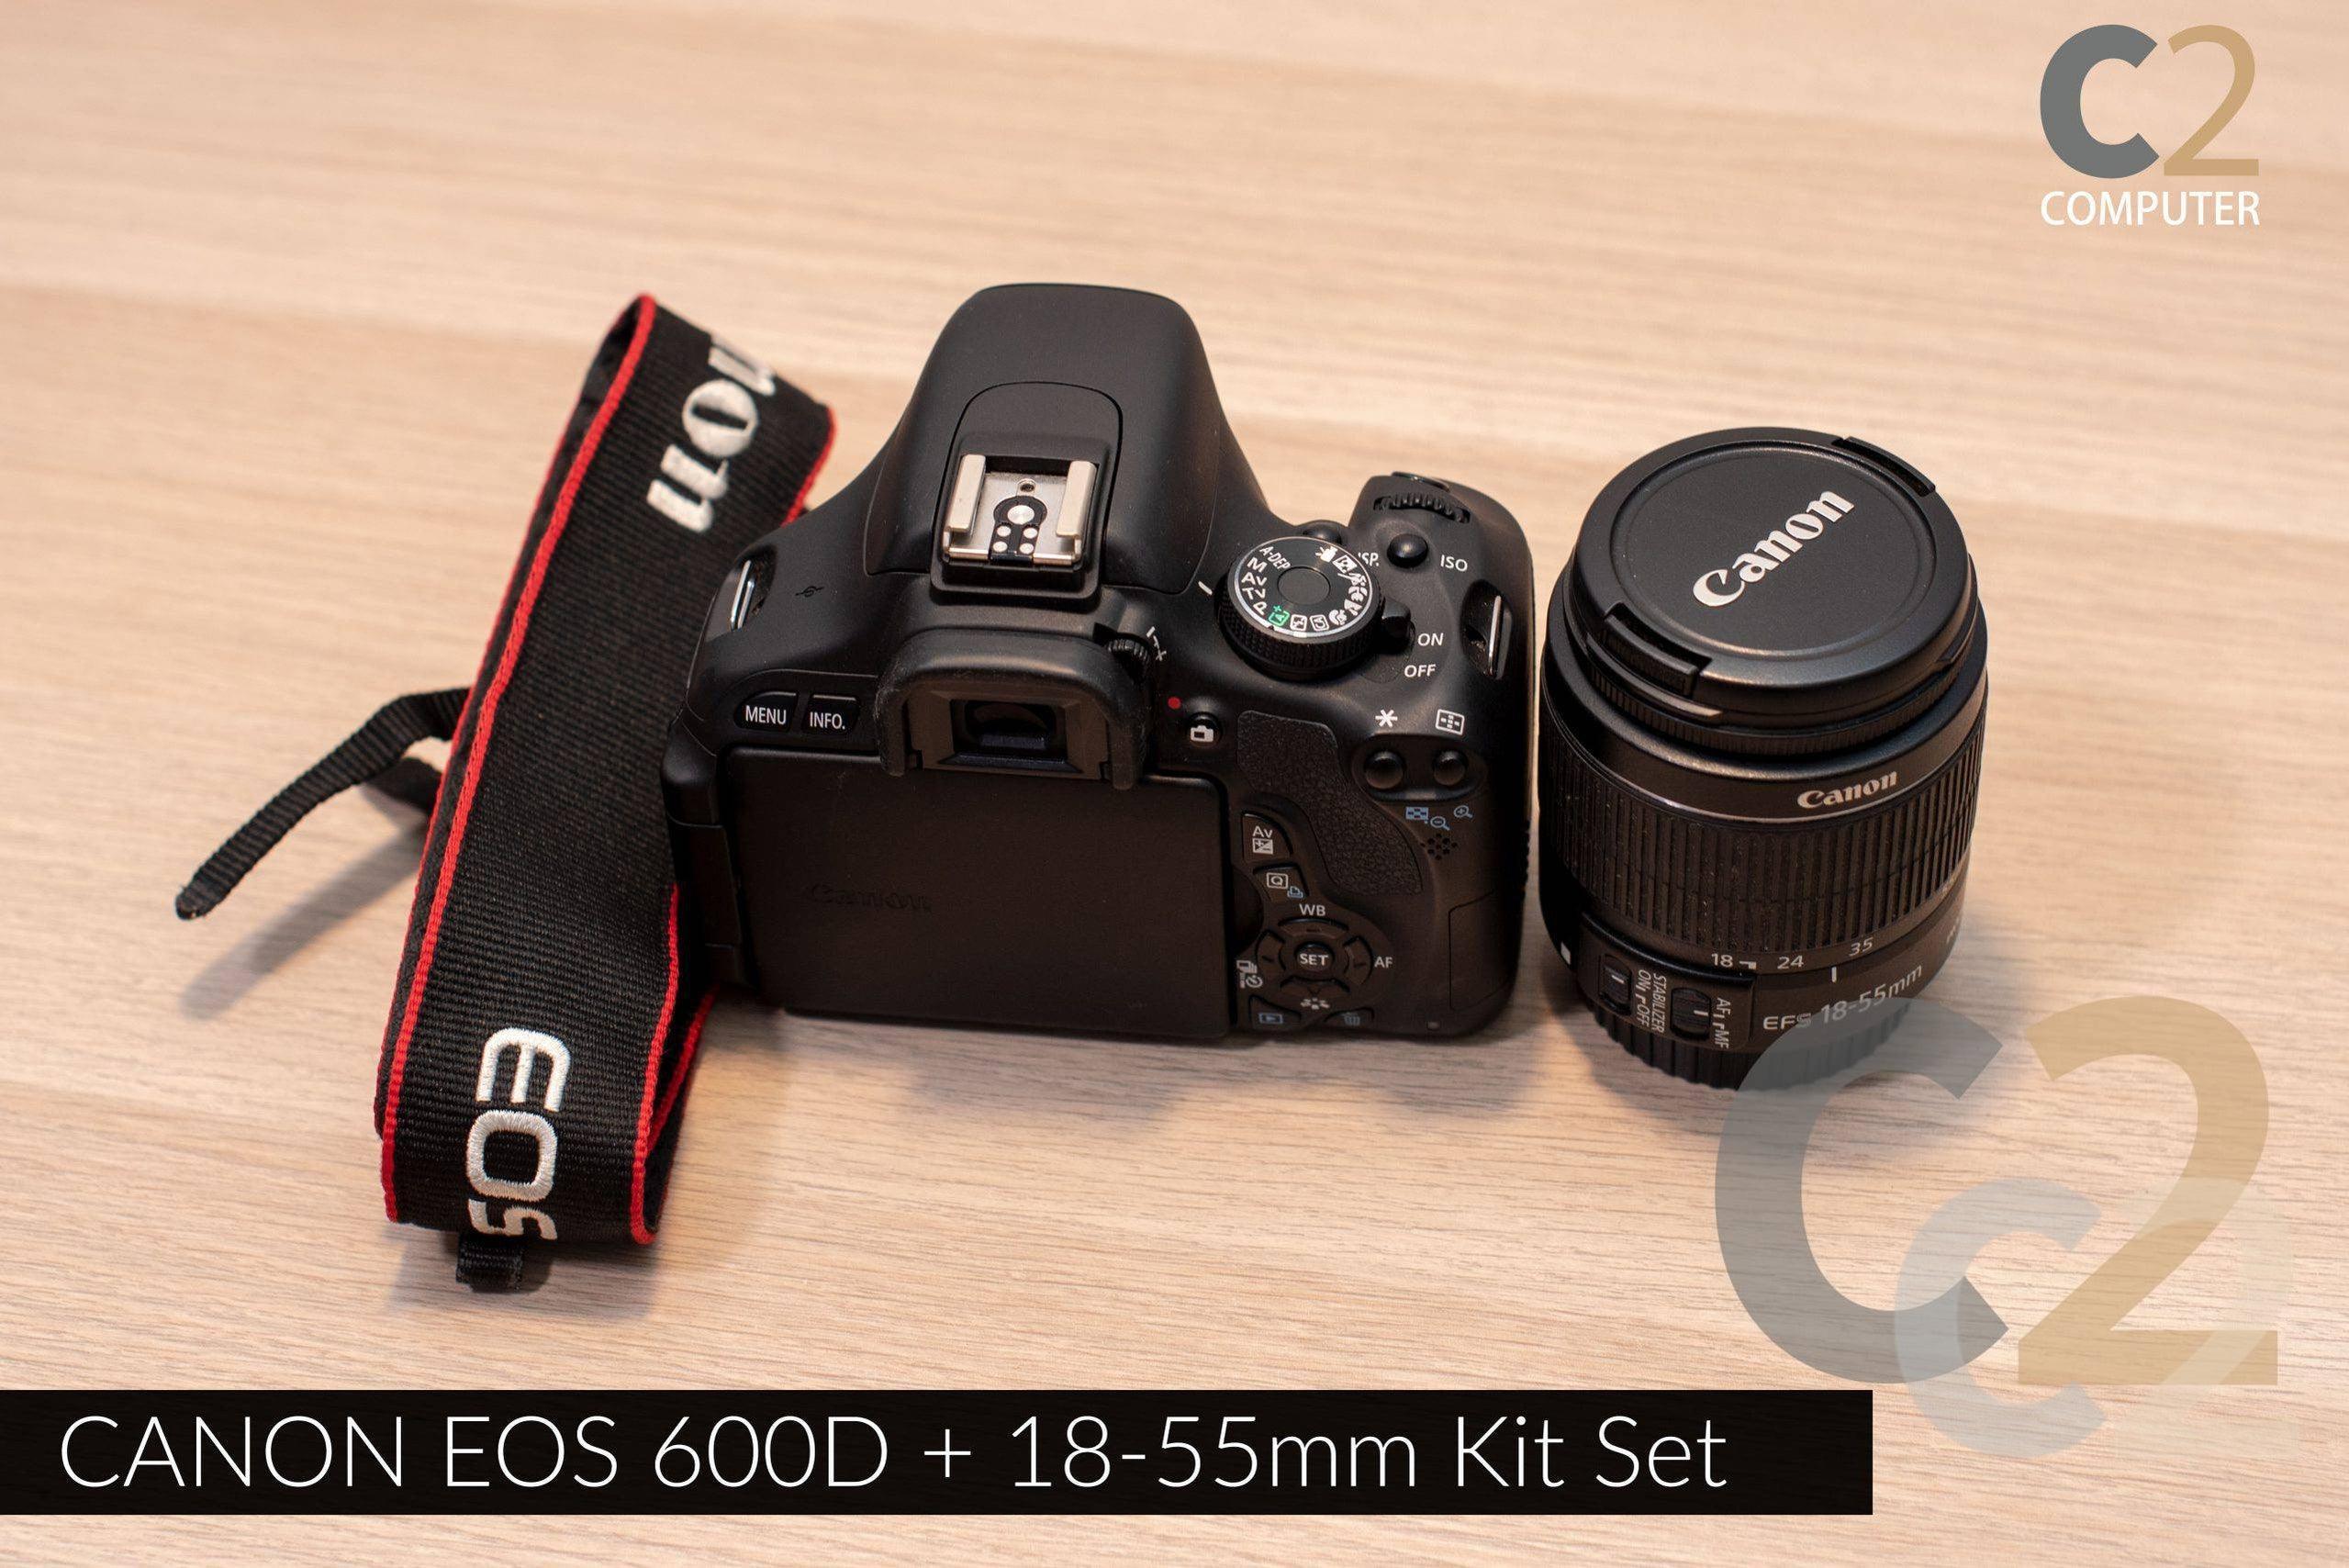 （特價一套）CANON EOS 600D +18-55mm Kit Set 單反相機, 旅行 Camera 90% NEW CANON